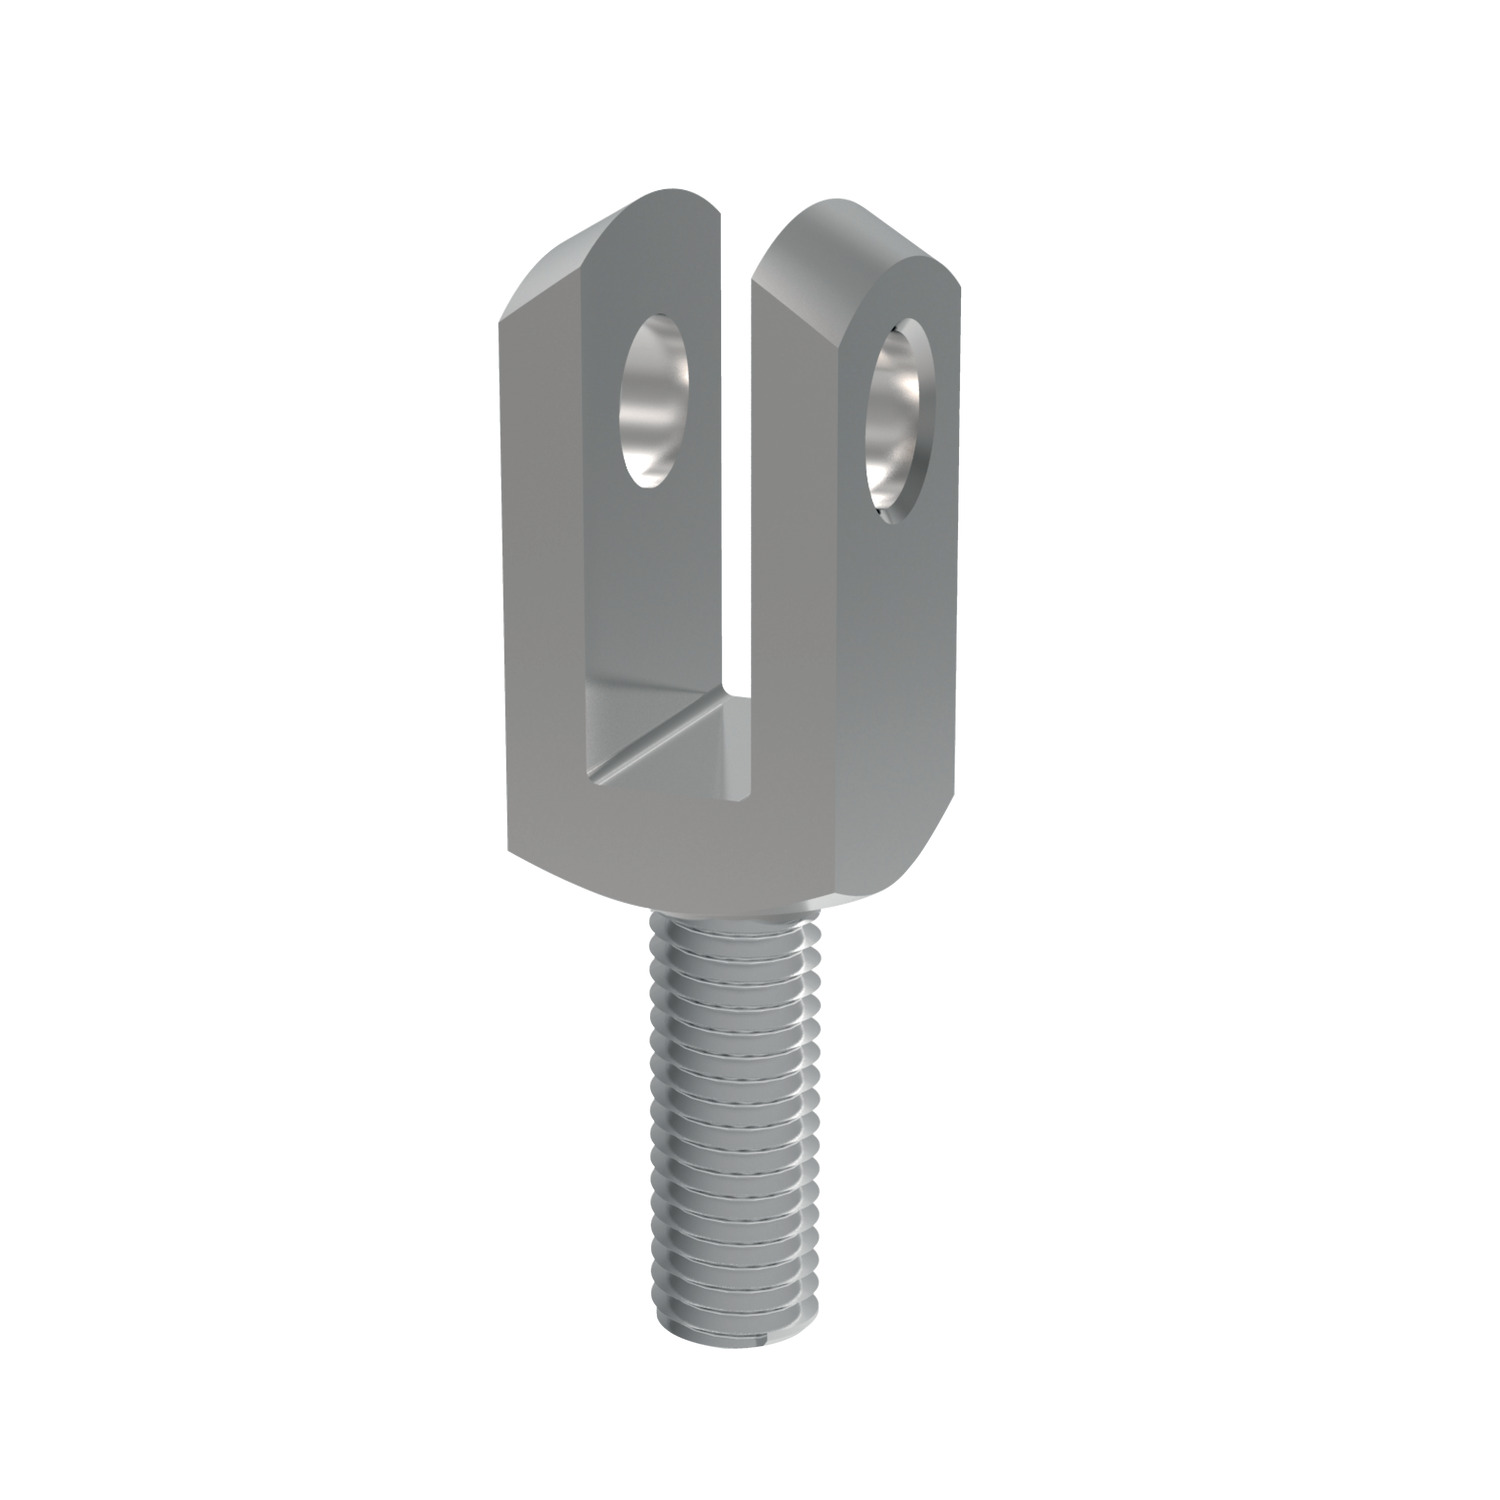 65641.W0008 Male Clevis Joints - Zinc plated steel. 8x16 - Left - 8 - 16